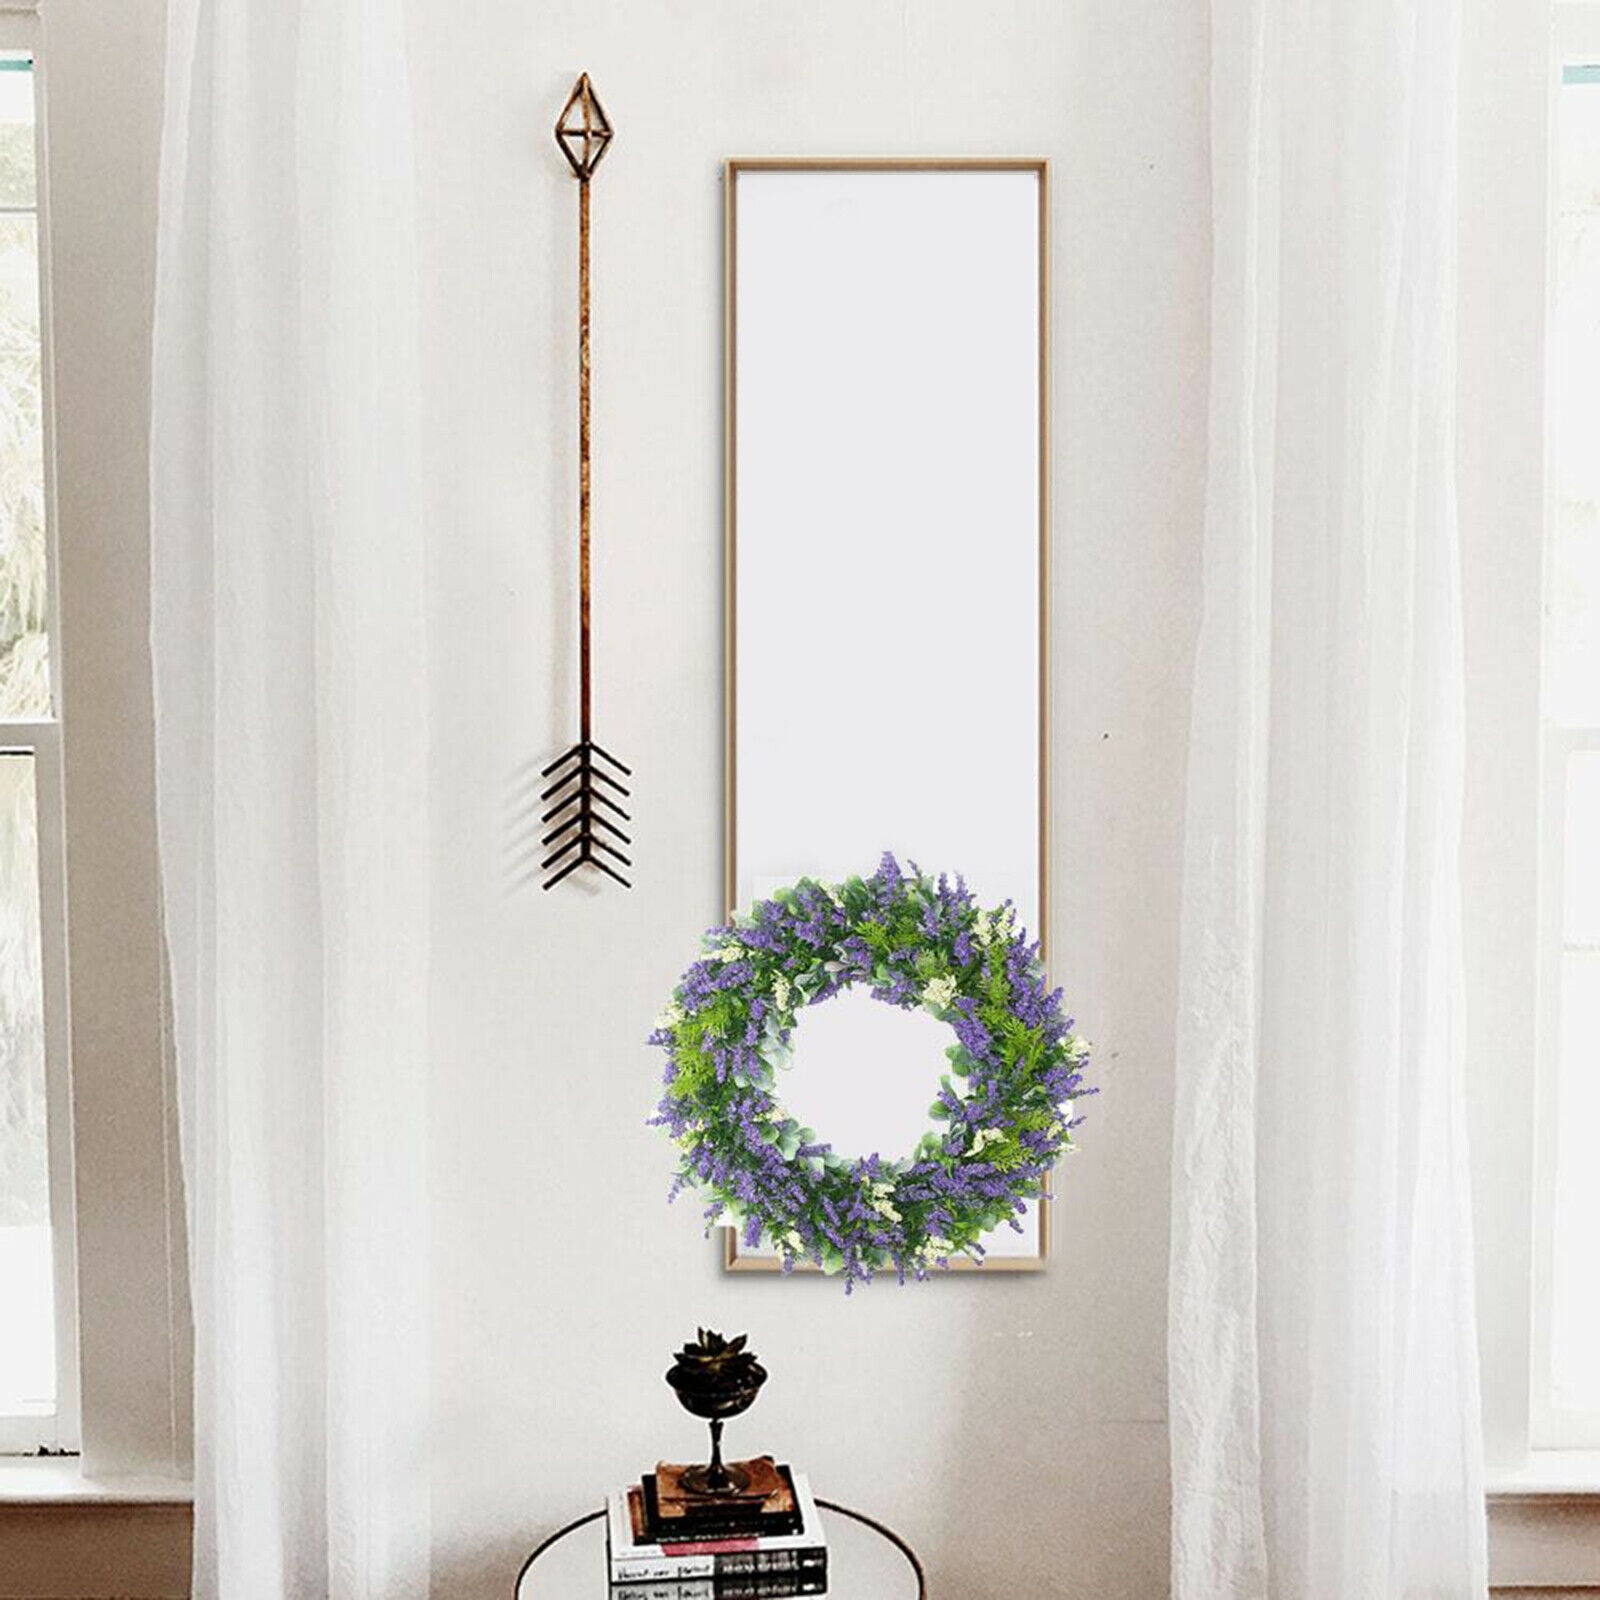 16'' Artificial Lavender Wreath Front Door Wall Window Garland Wedding Decor